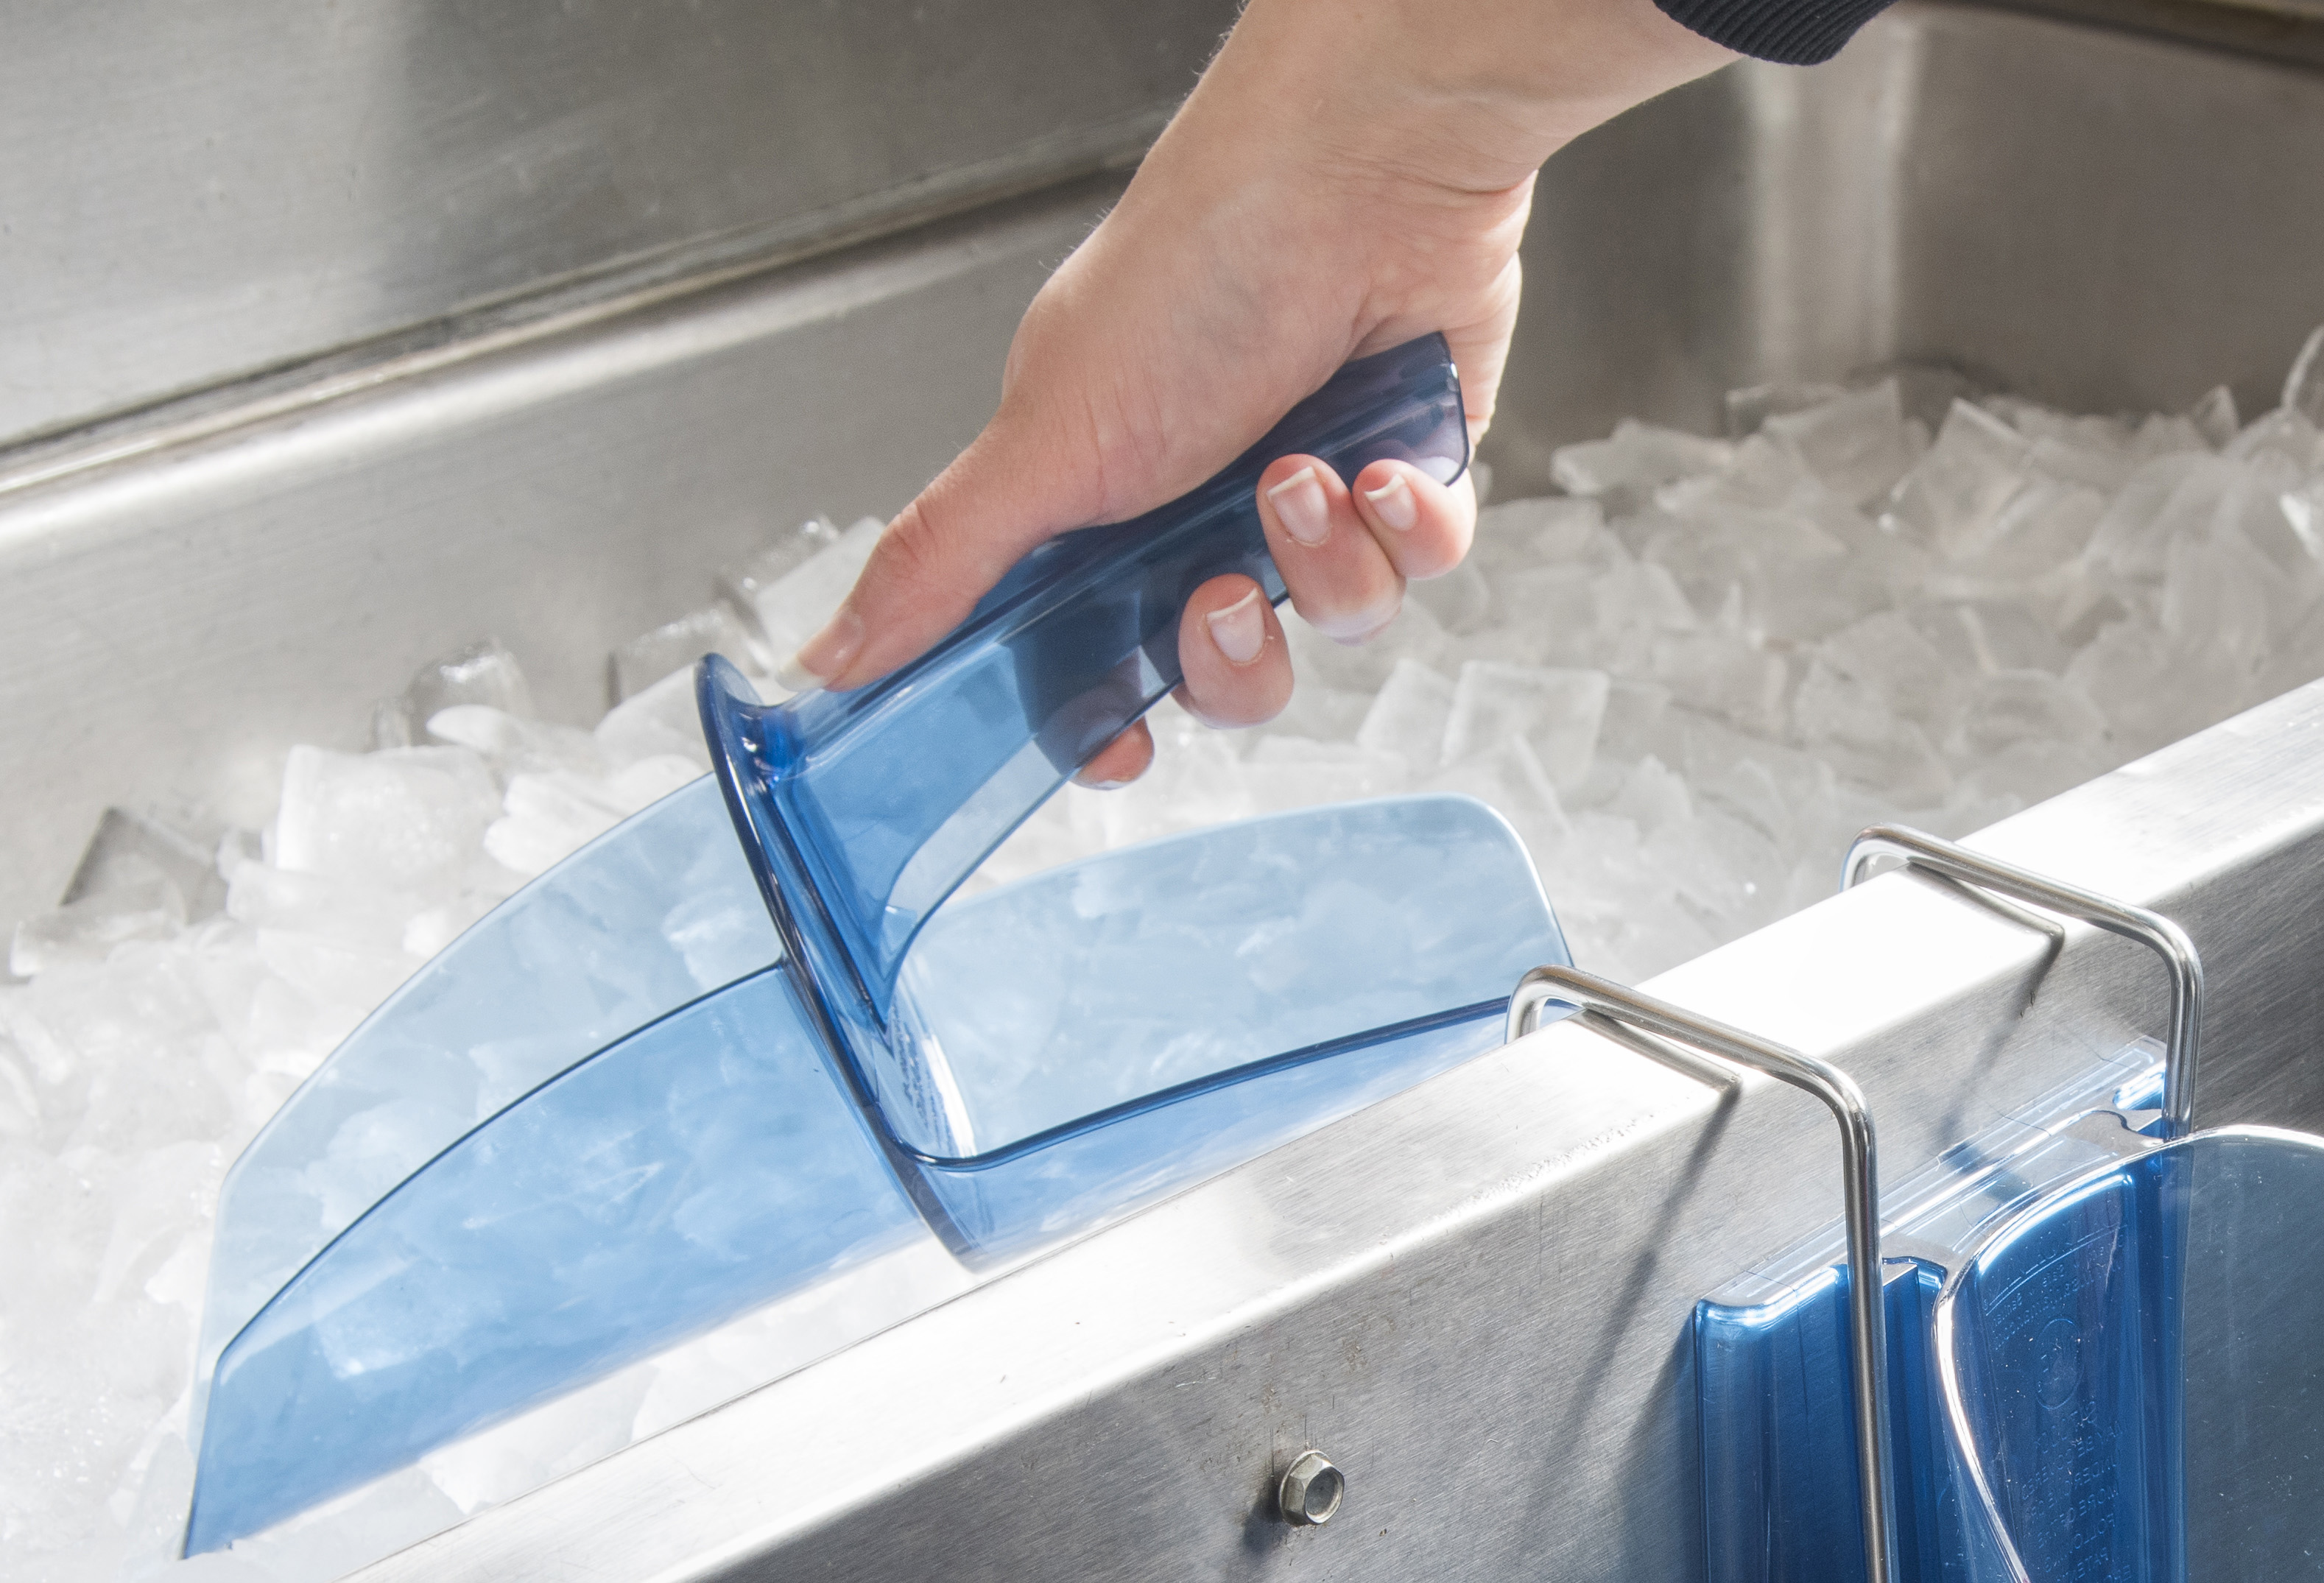 Ice hygiene: avoid the poop – use a scoop